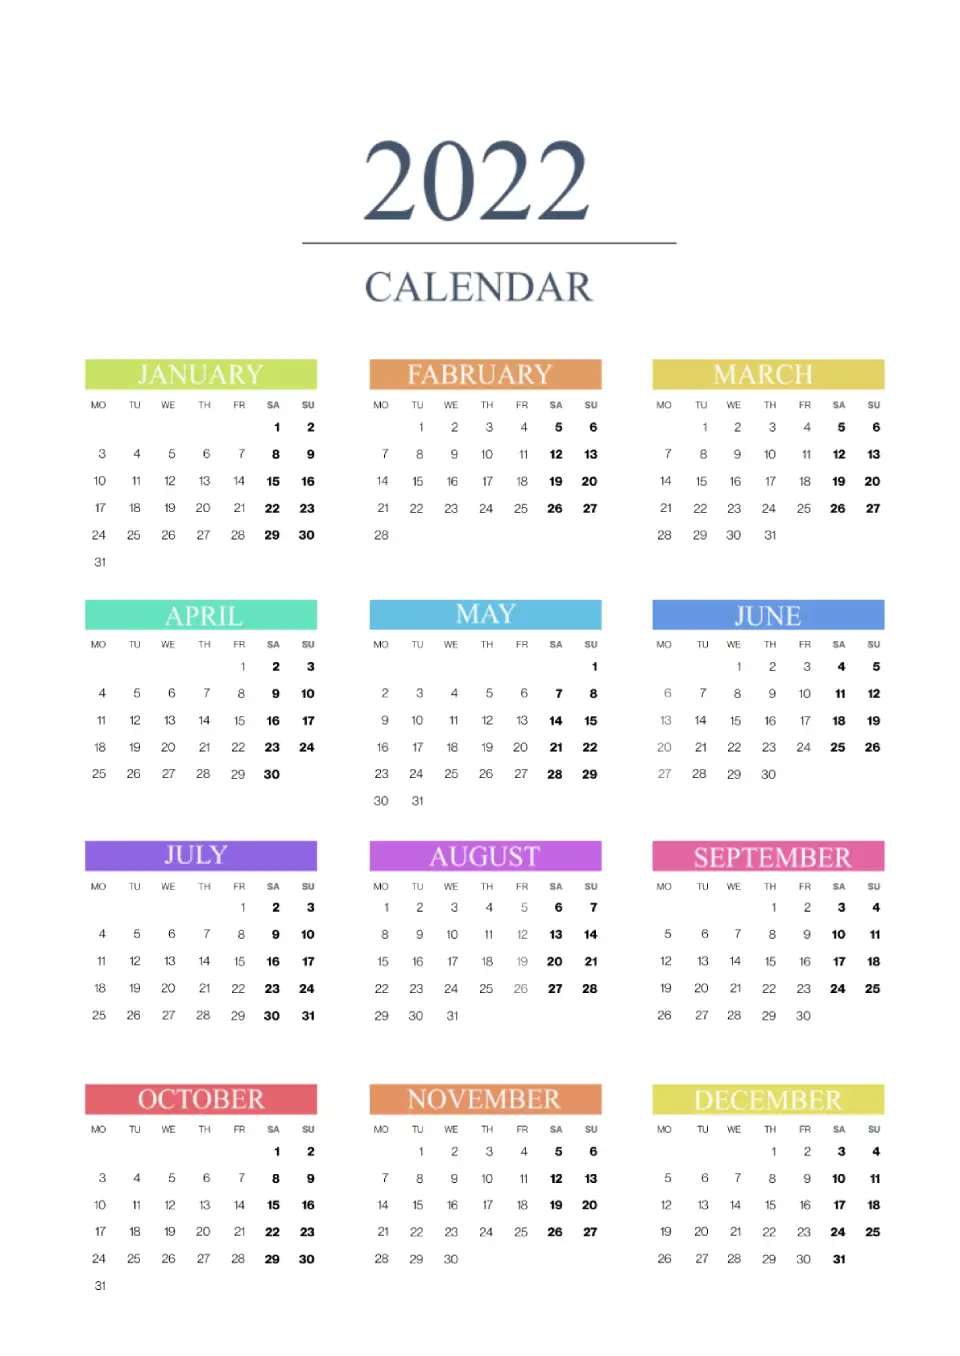 2022 Calendar template for Google Docs